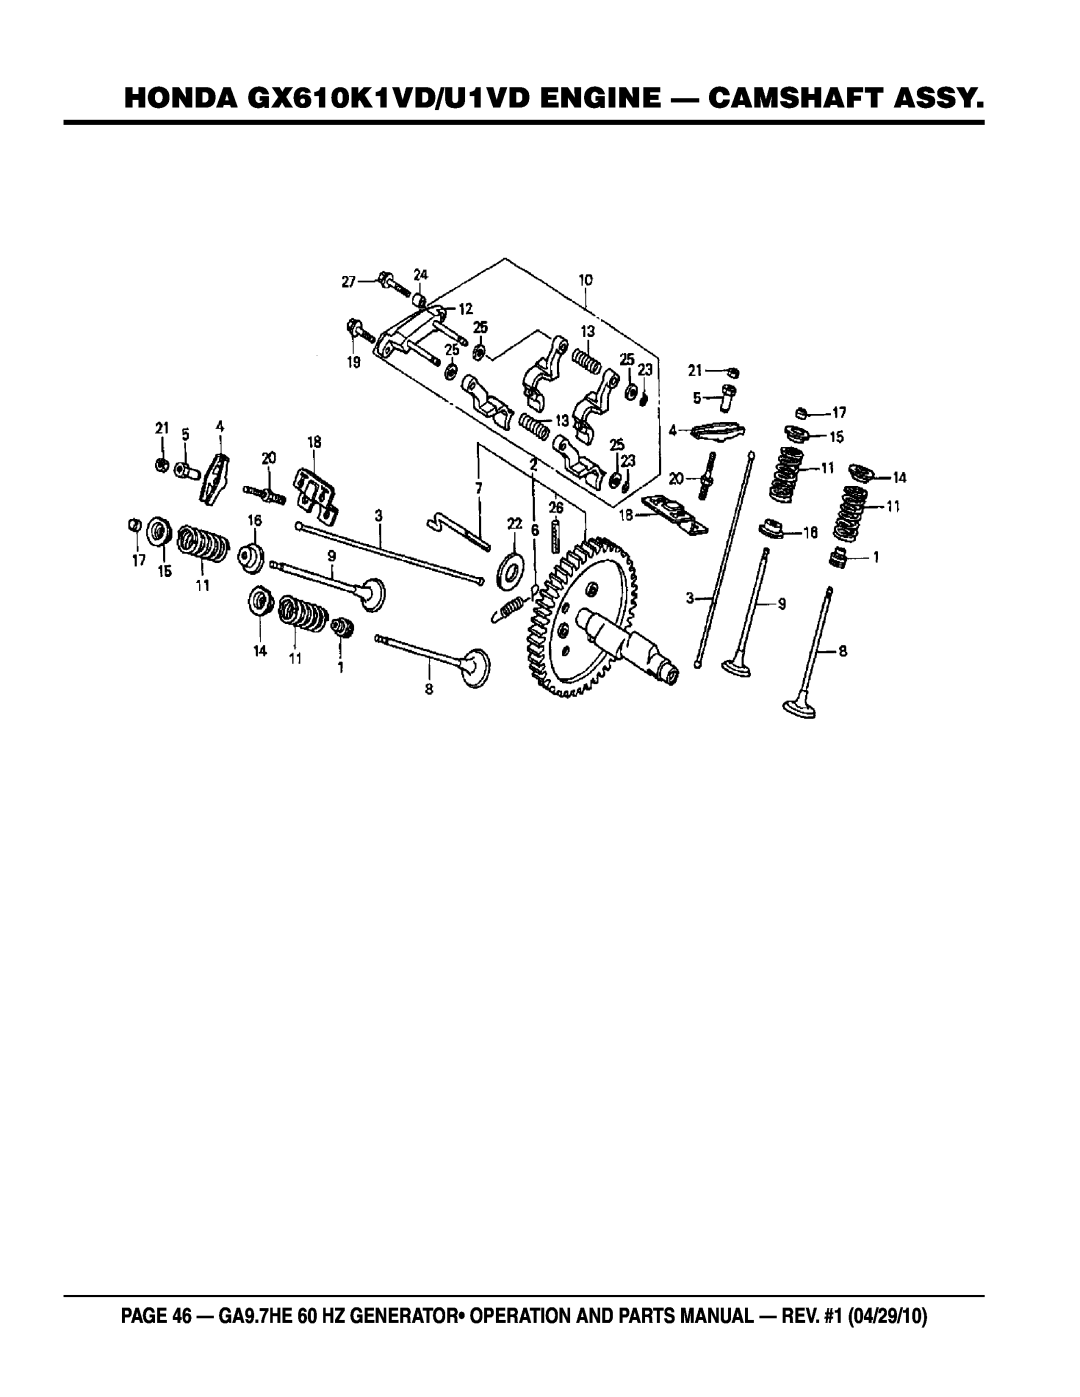 Multiquip ga-9.7HE manual HONDA GX610K1VD/U1VD ENGINE - CAMSHAFT ASSY 